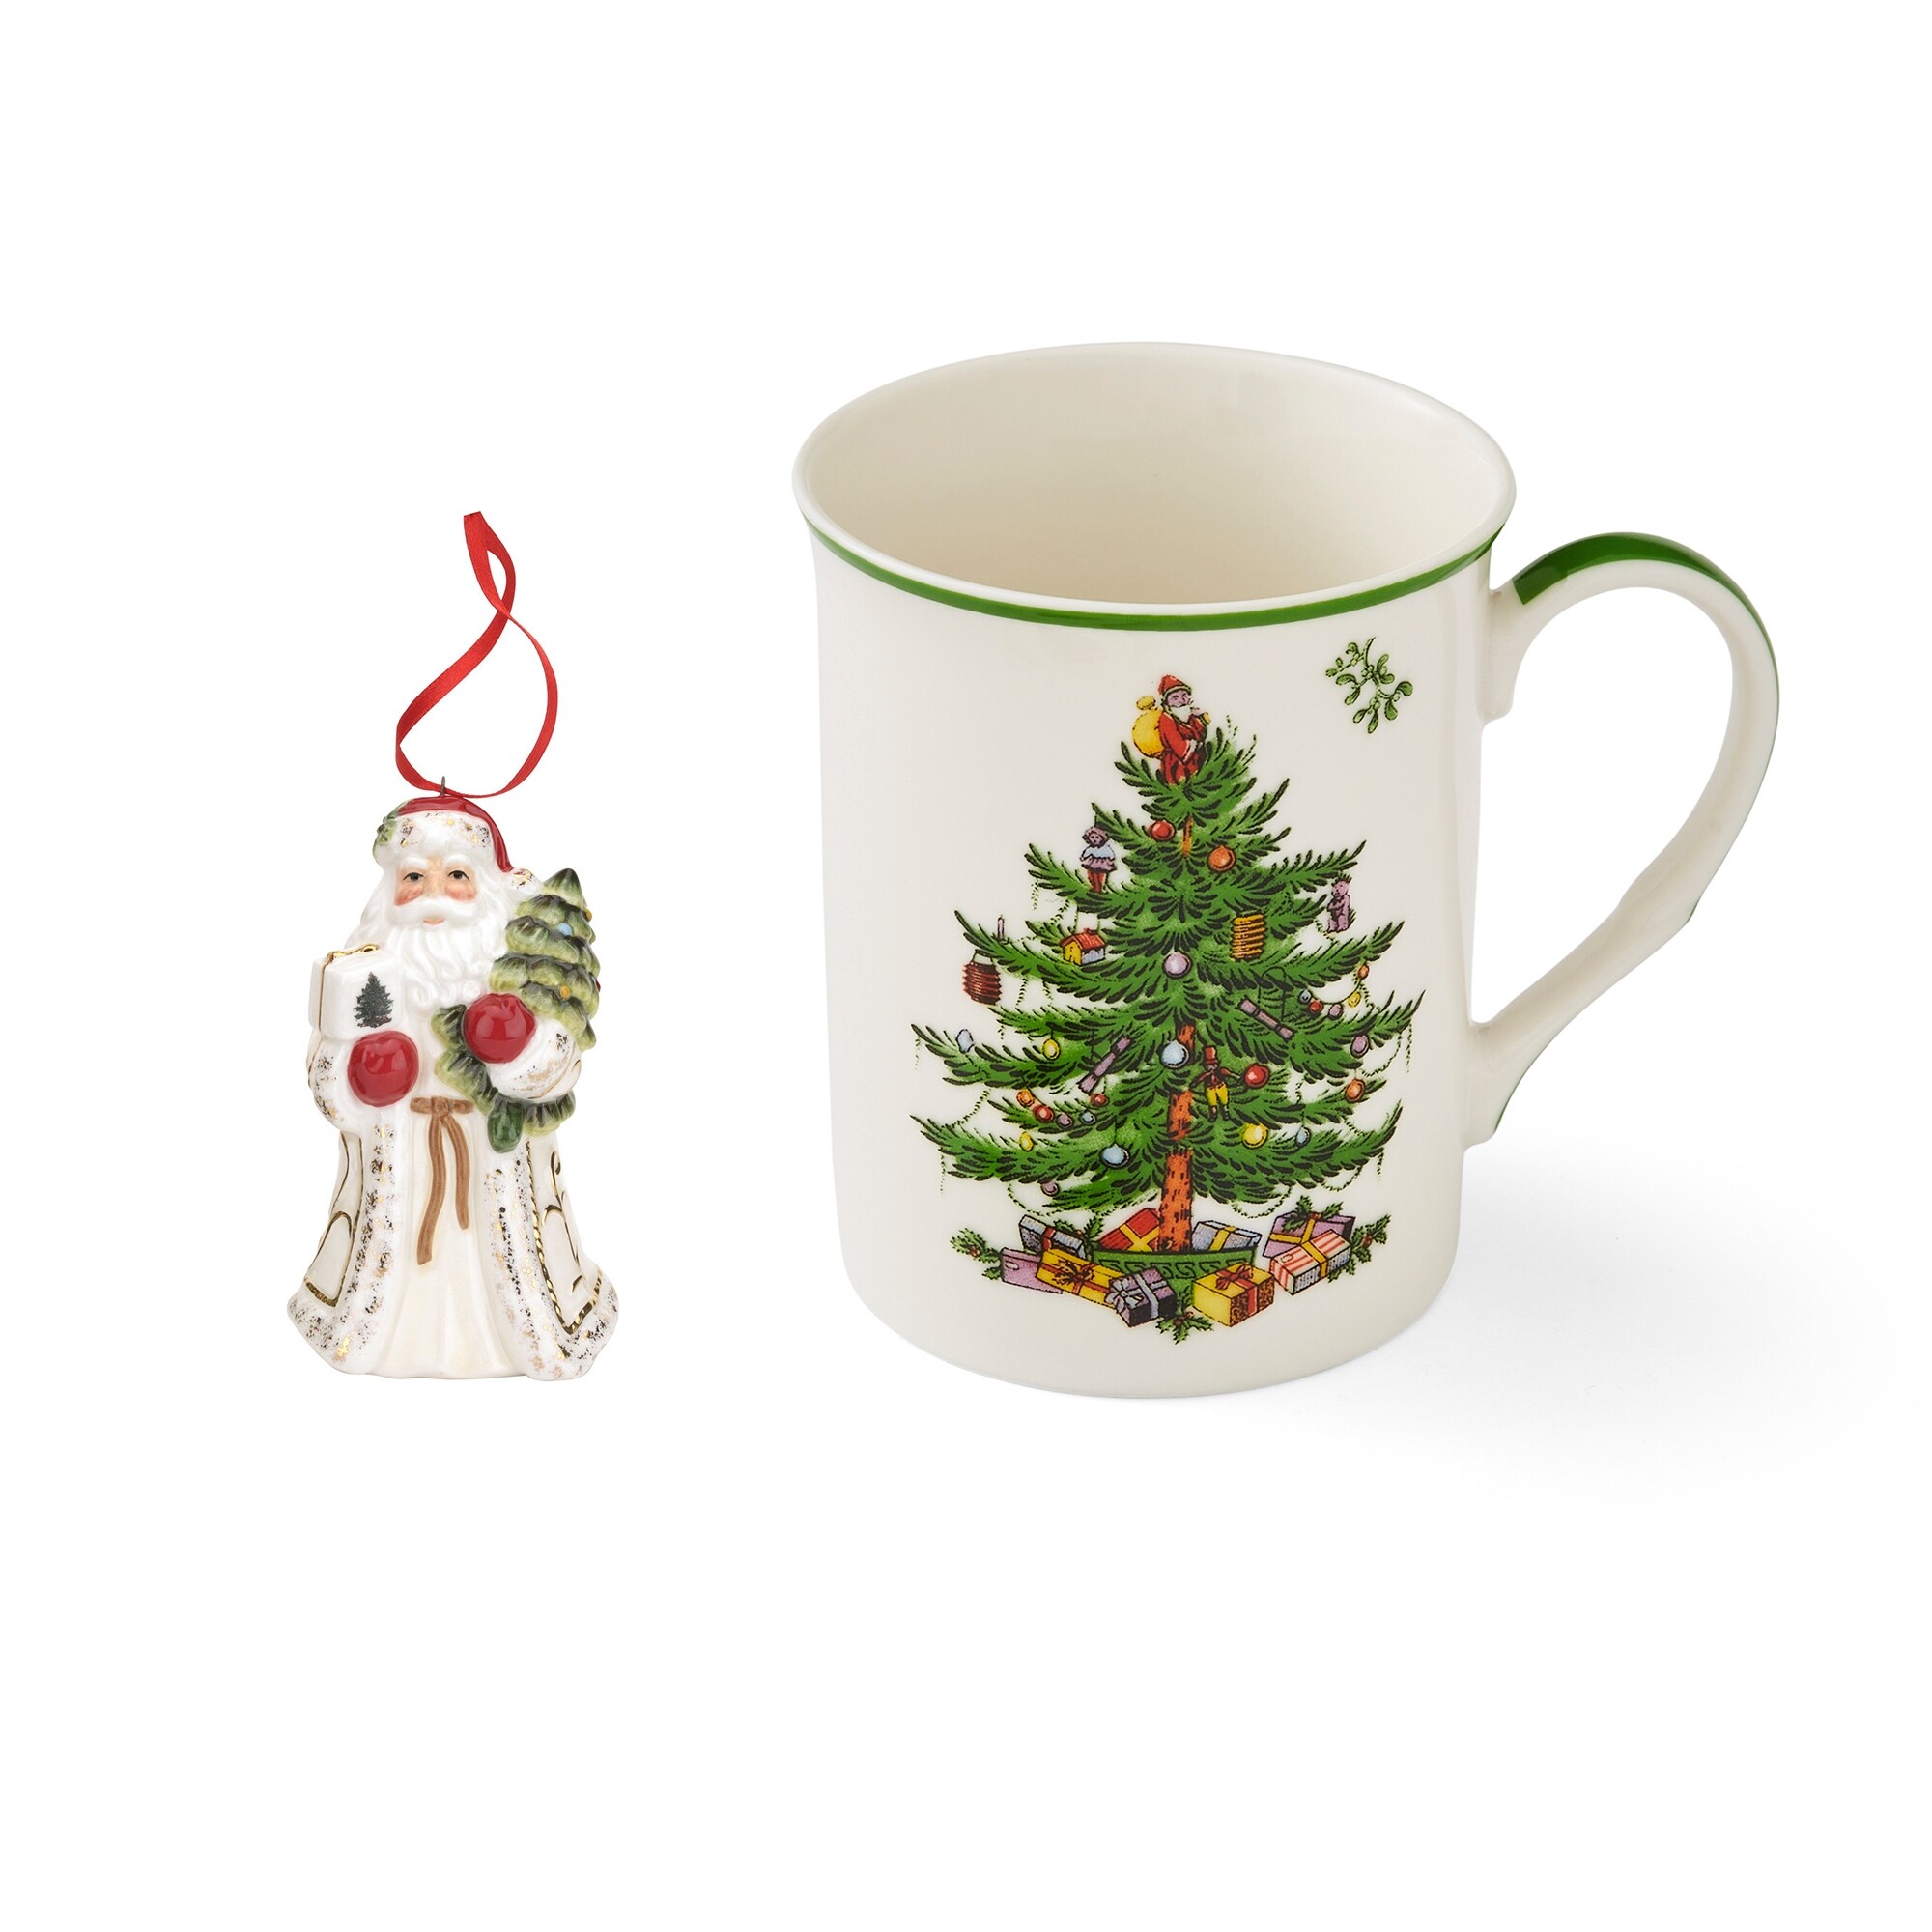 https://ak1.ostkcdn.com/images/products/is/images/direct/0d5c38762754f91c4227a408e712ca723c93bdc7/Spode-Christmas-Tree-Mug-and-Santa-Ornament-Set.jpg